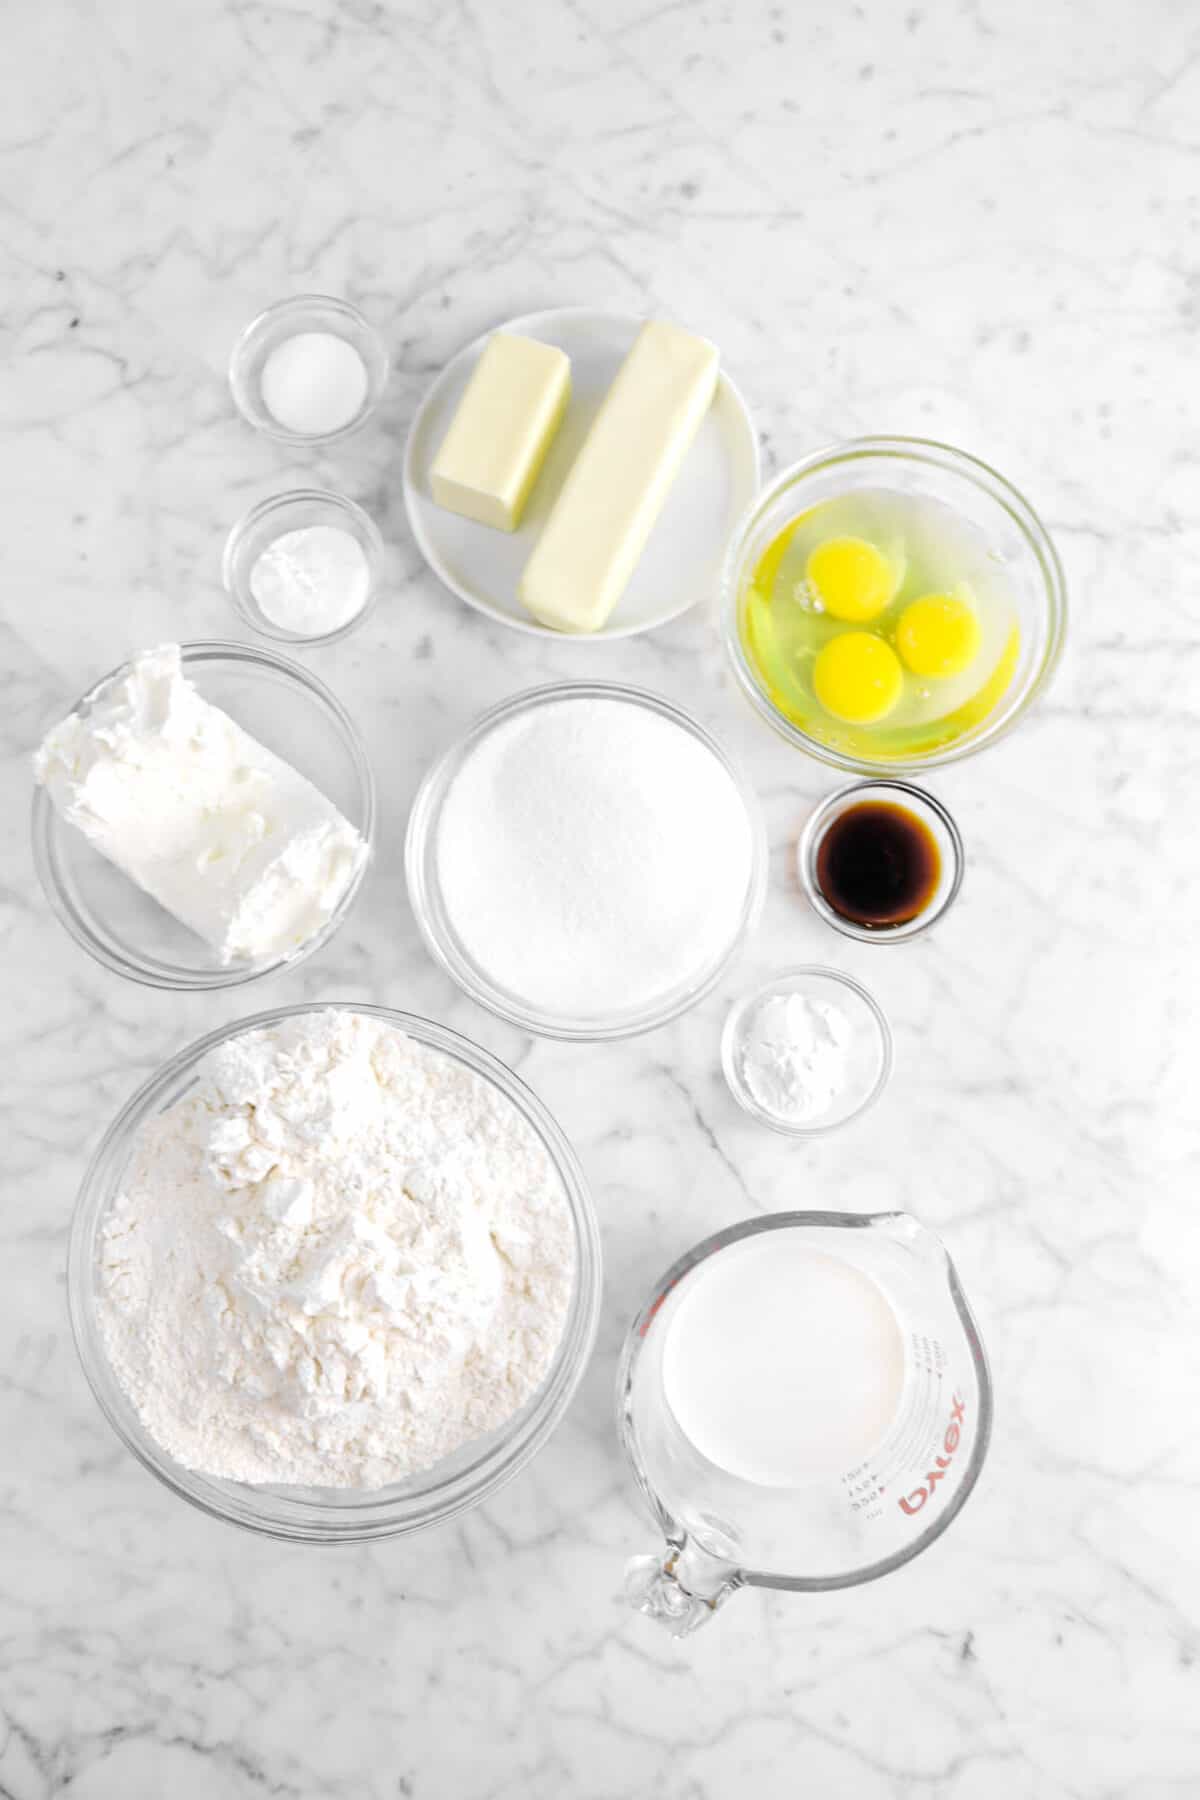 salt, baking powder, baking soda, butter, sugar, eggs, vanilla, cream cheese flour, and milk on marble counter